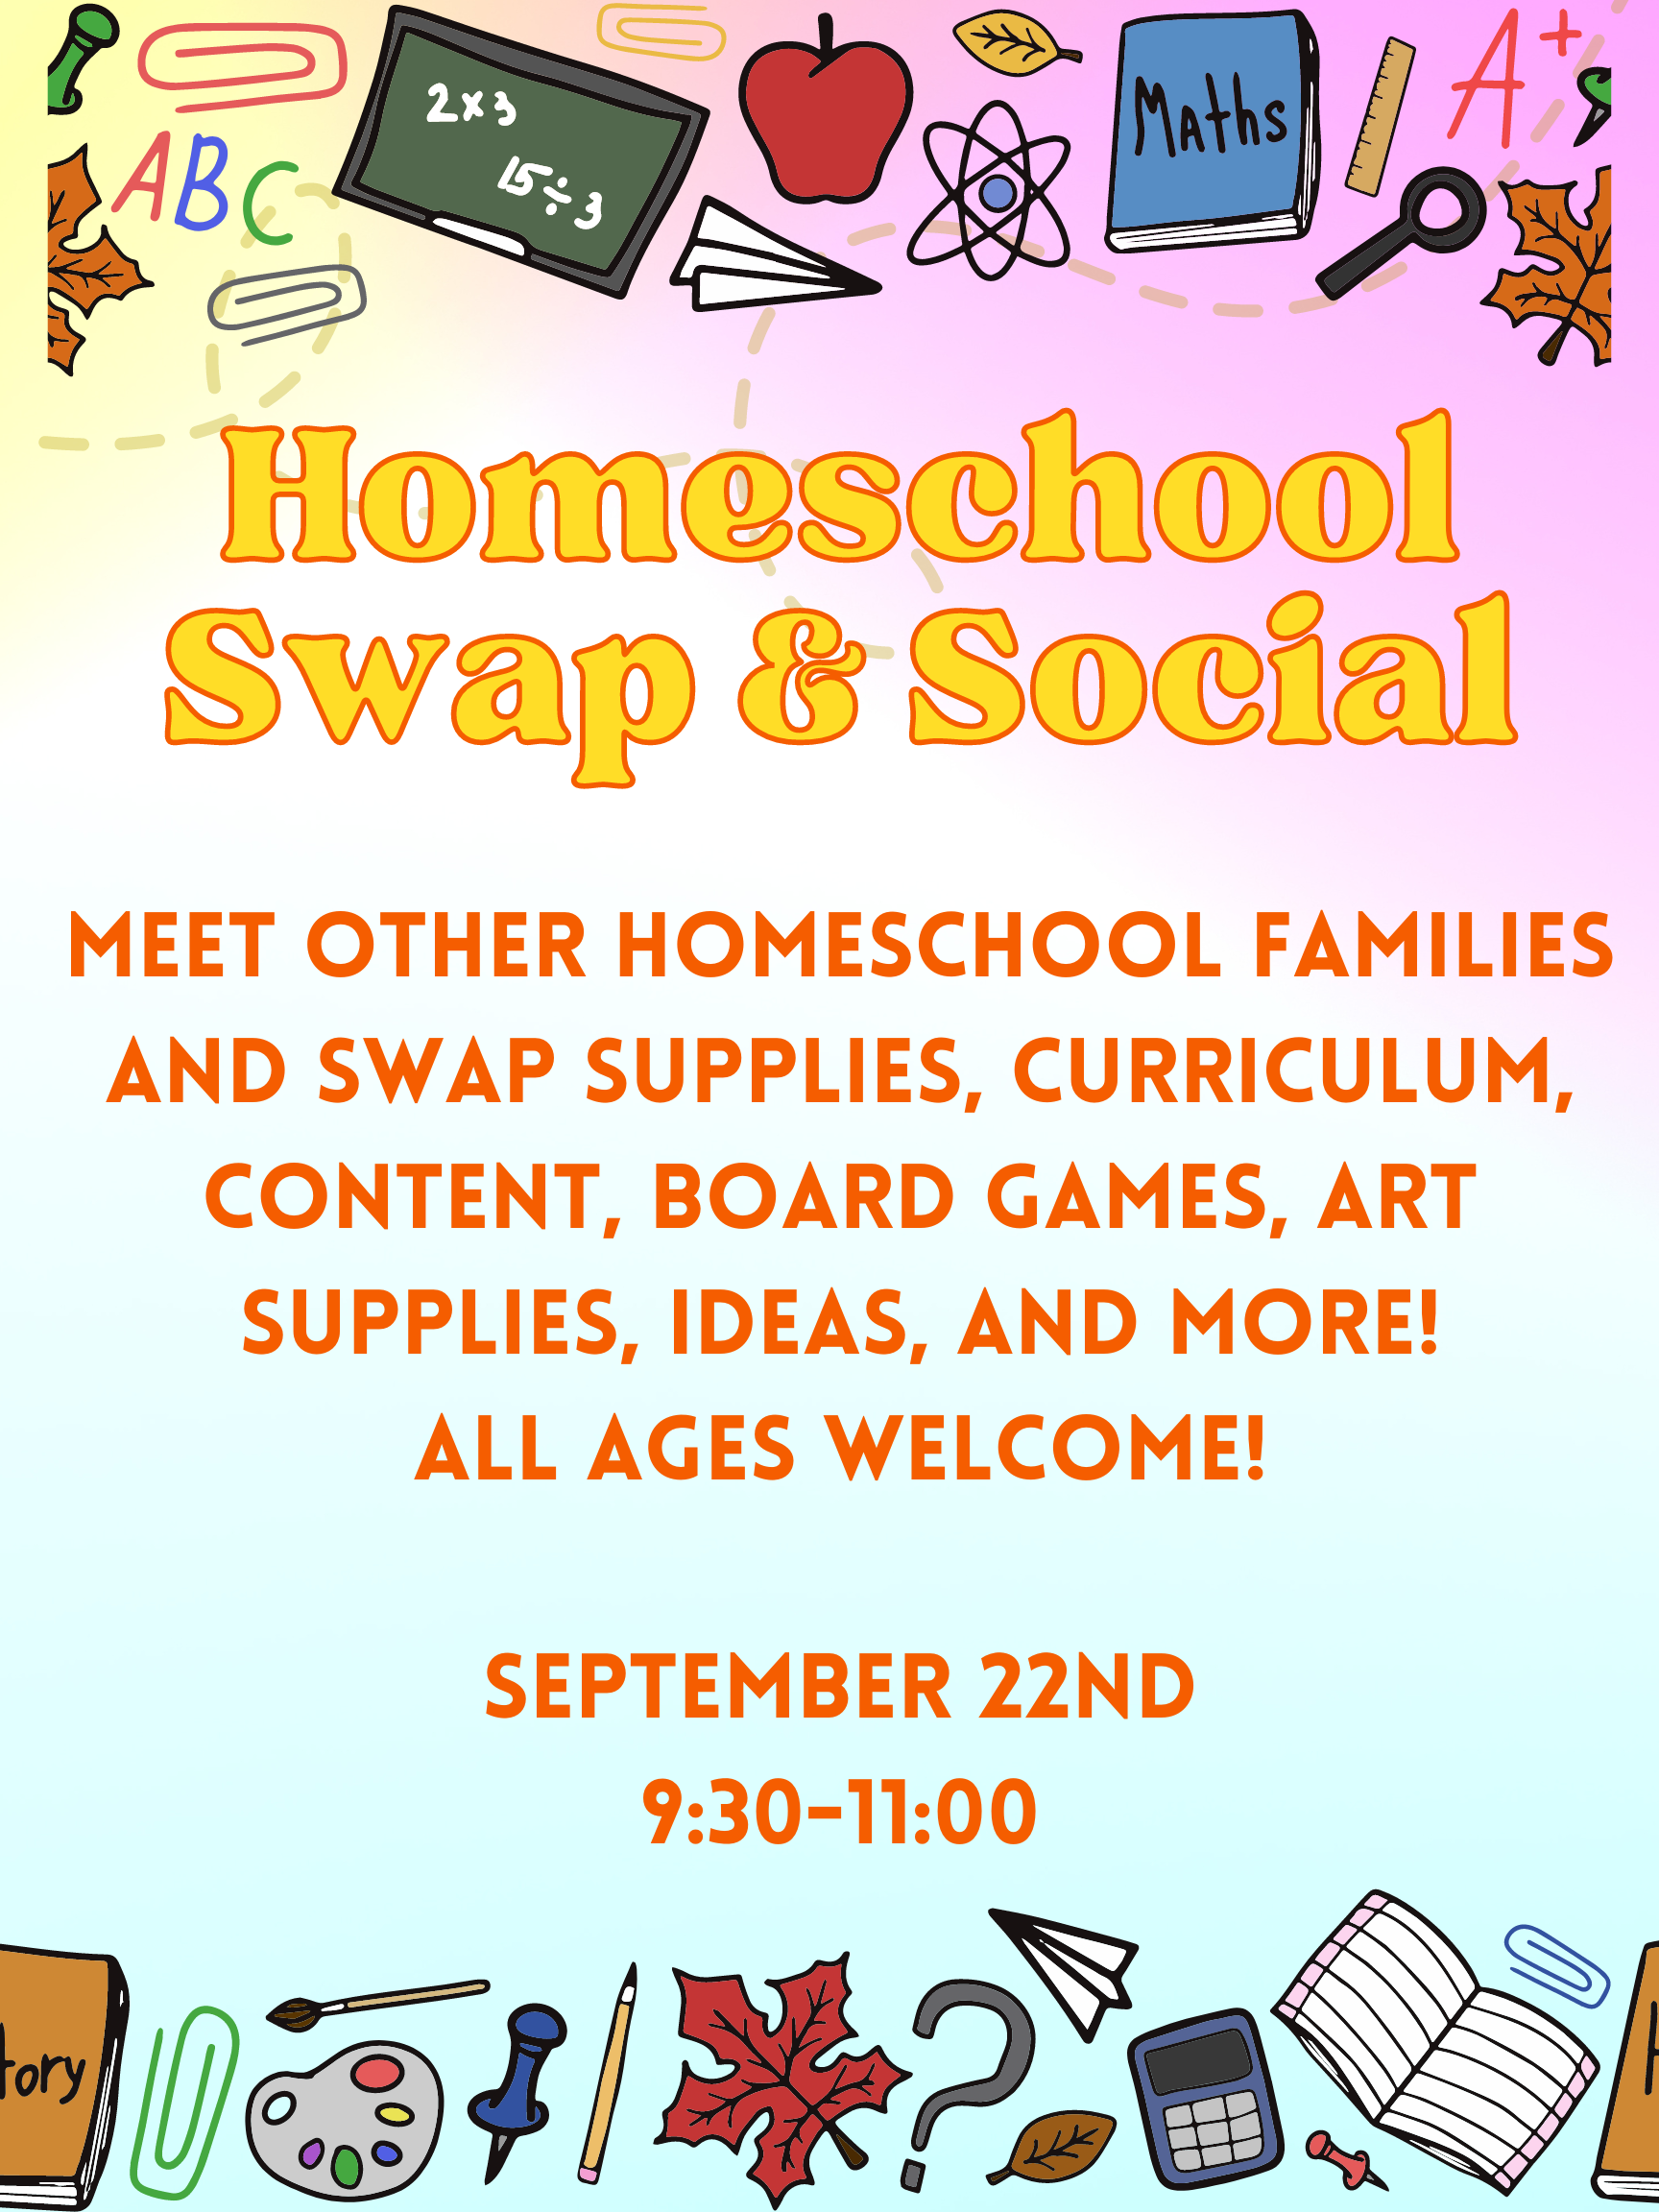 Homeschool swap social